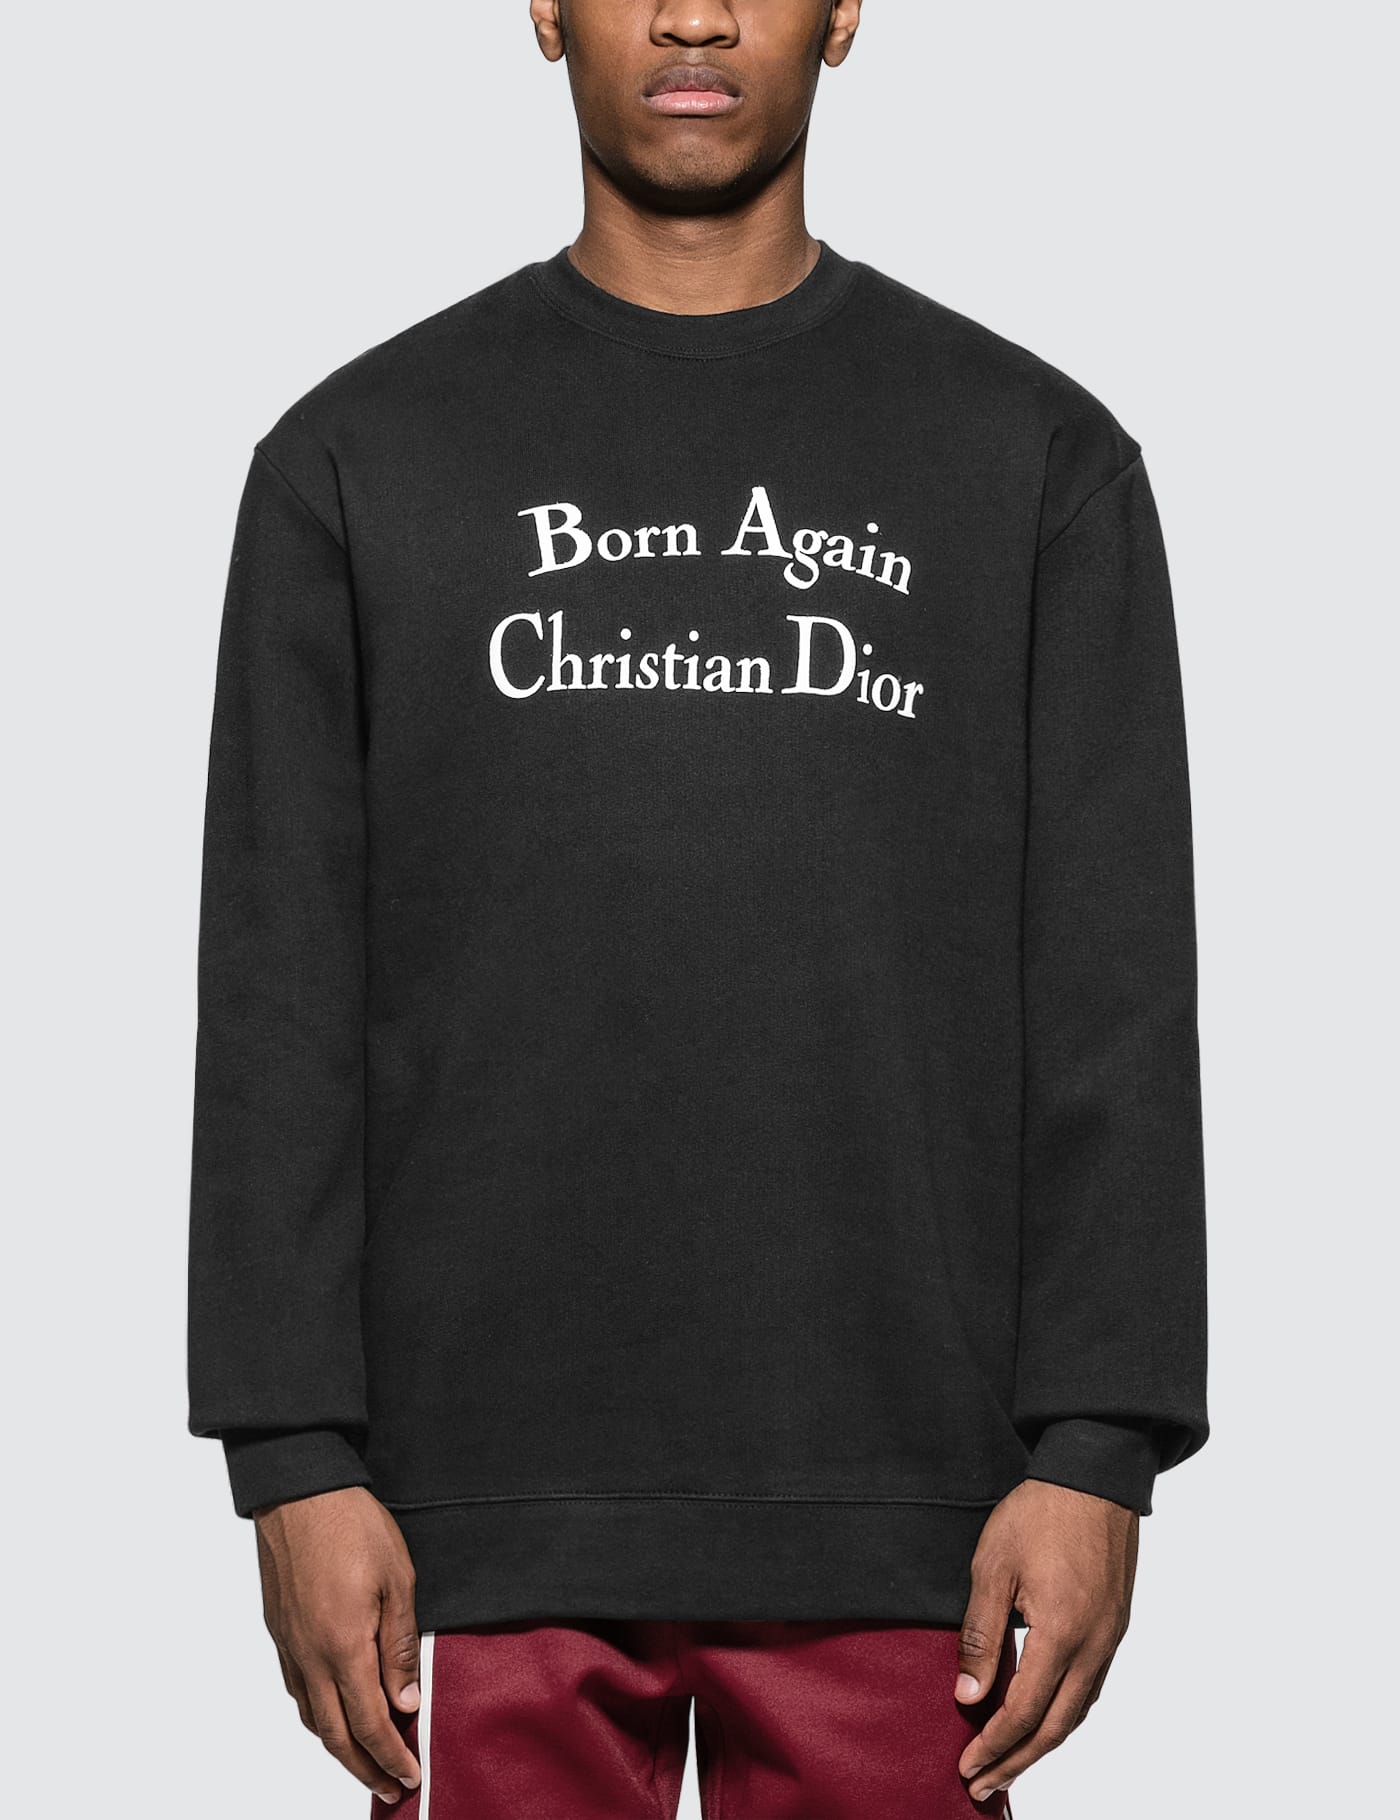 christian dior born